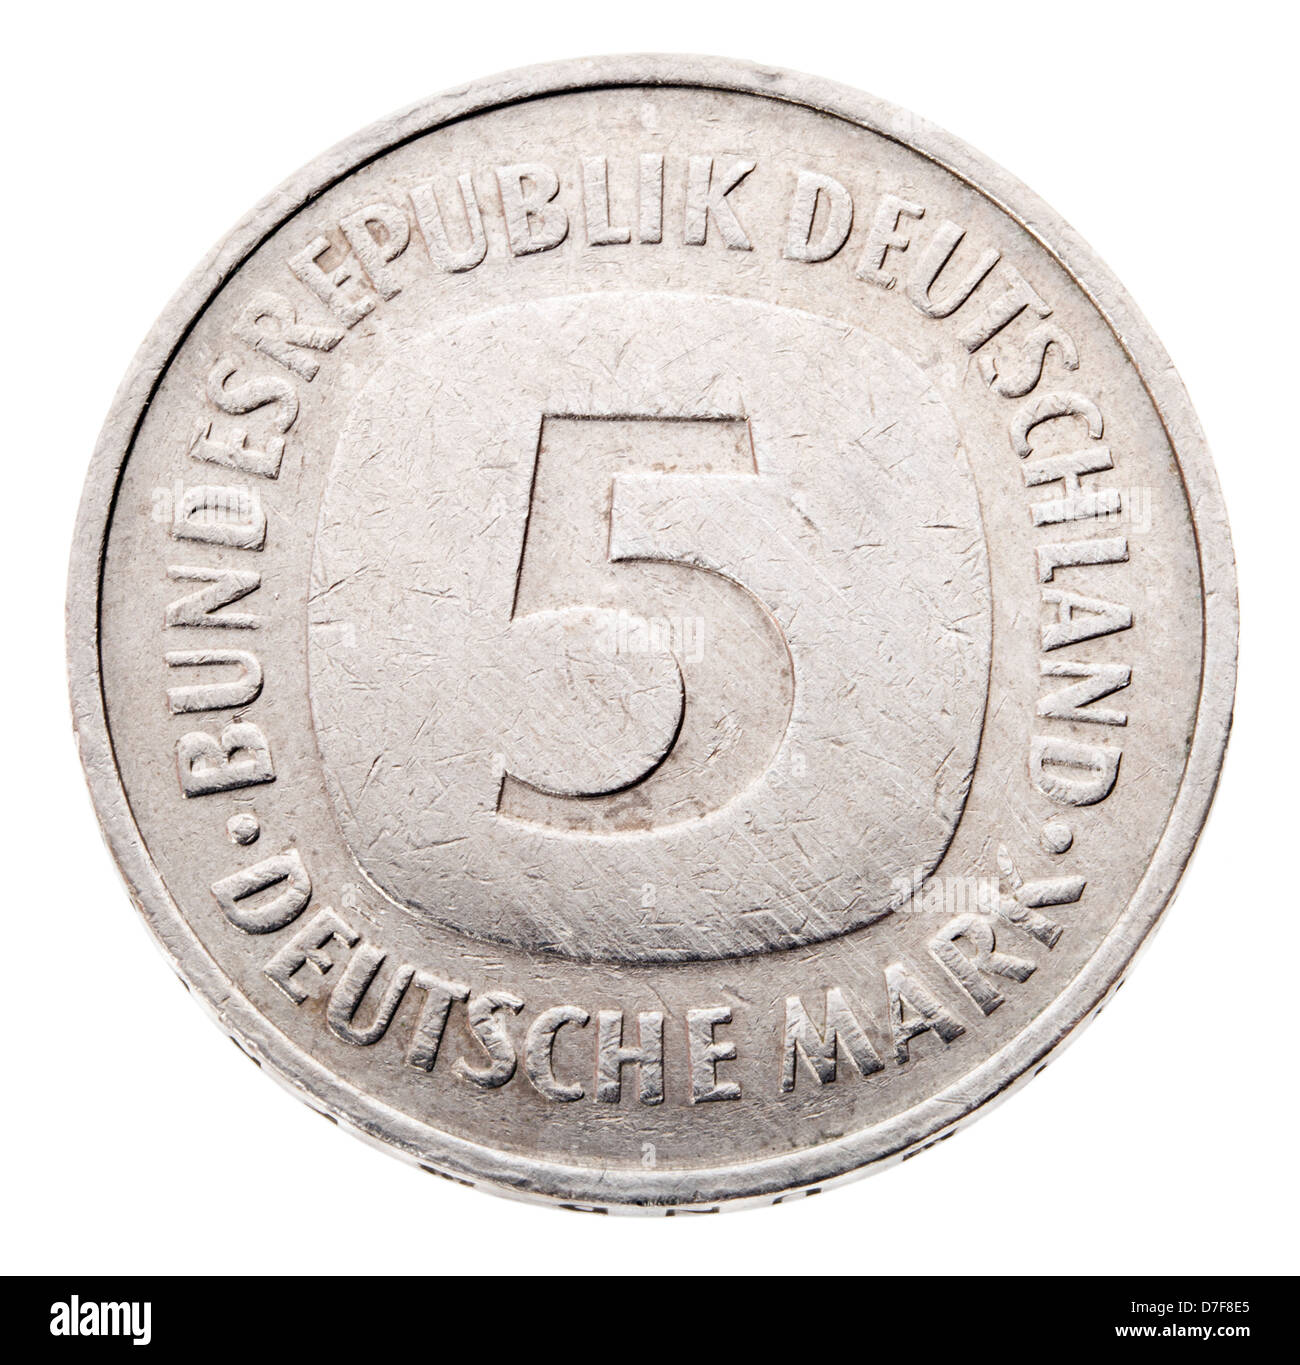 Frontal view obverse (heads) side a 5 Deutsche Mark (DM) coin minted in 1980. Depicted is denomination coin. Deutsche Mark was Stock Photo